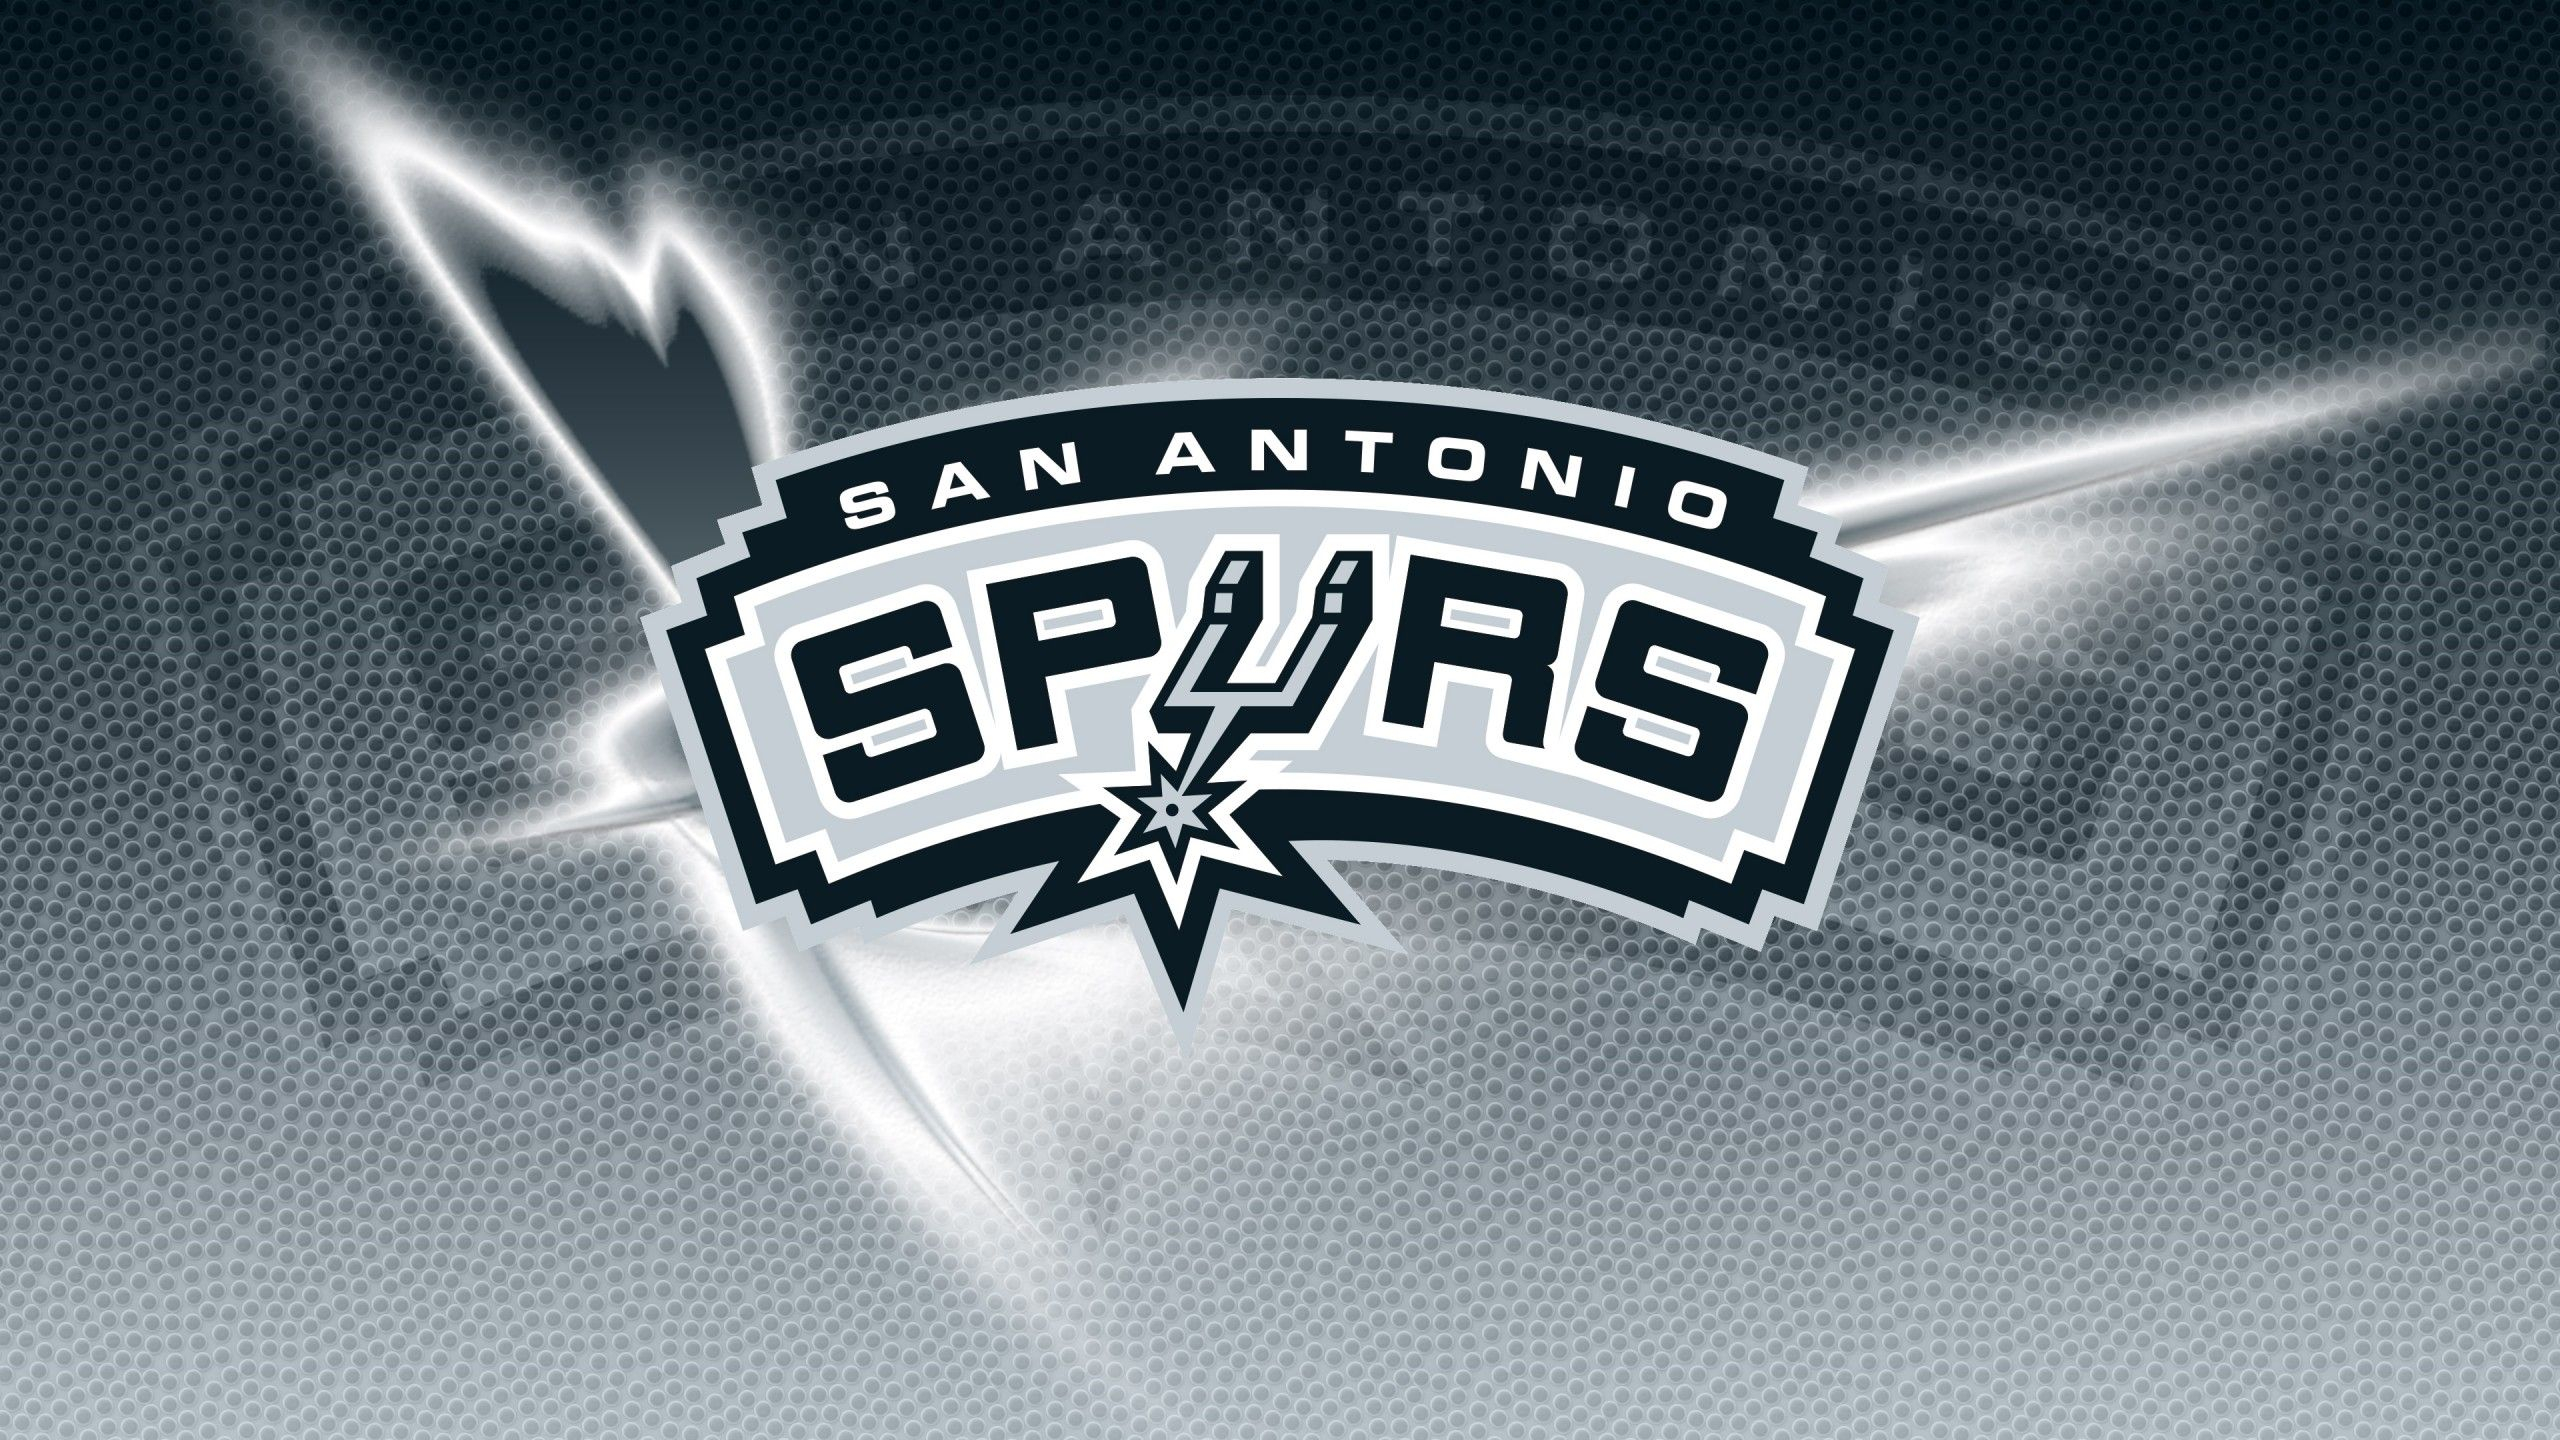 2560x1440 San Antonio Spurs Logo Wallpapers Top Free San Antonio Spurs Logo Backgrounds